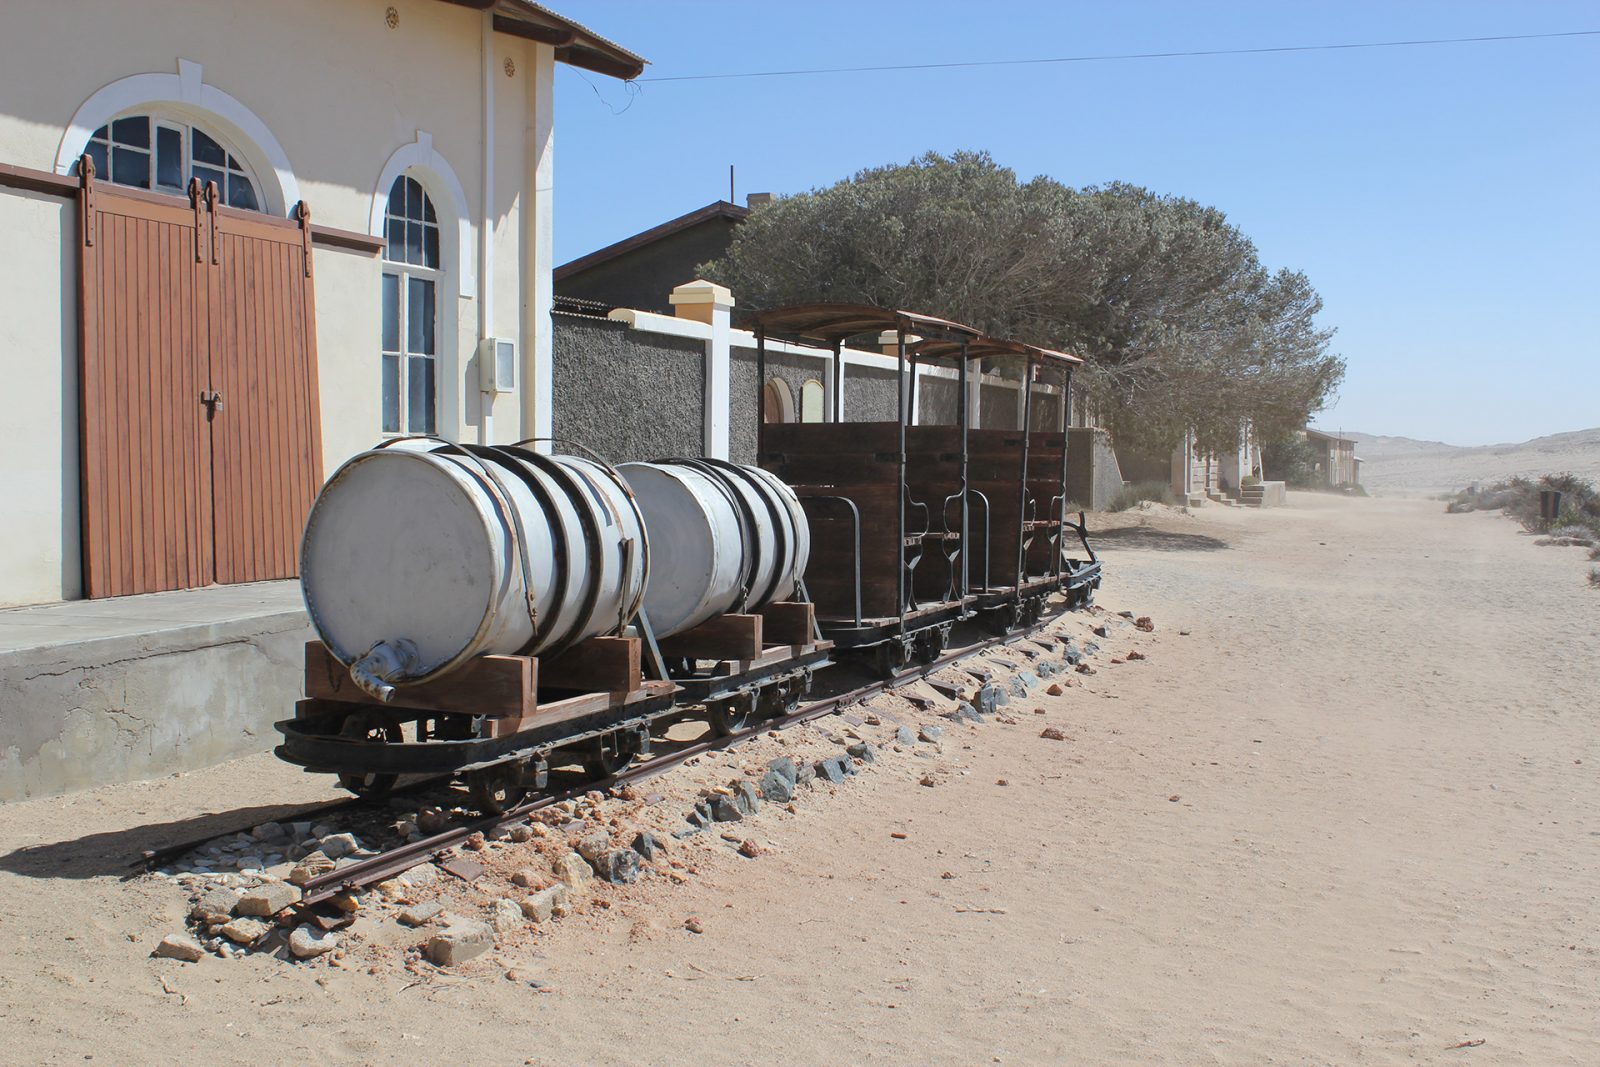 Old Train Namibia